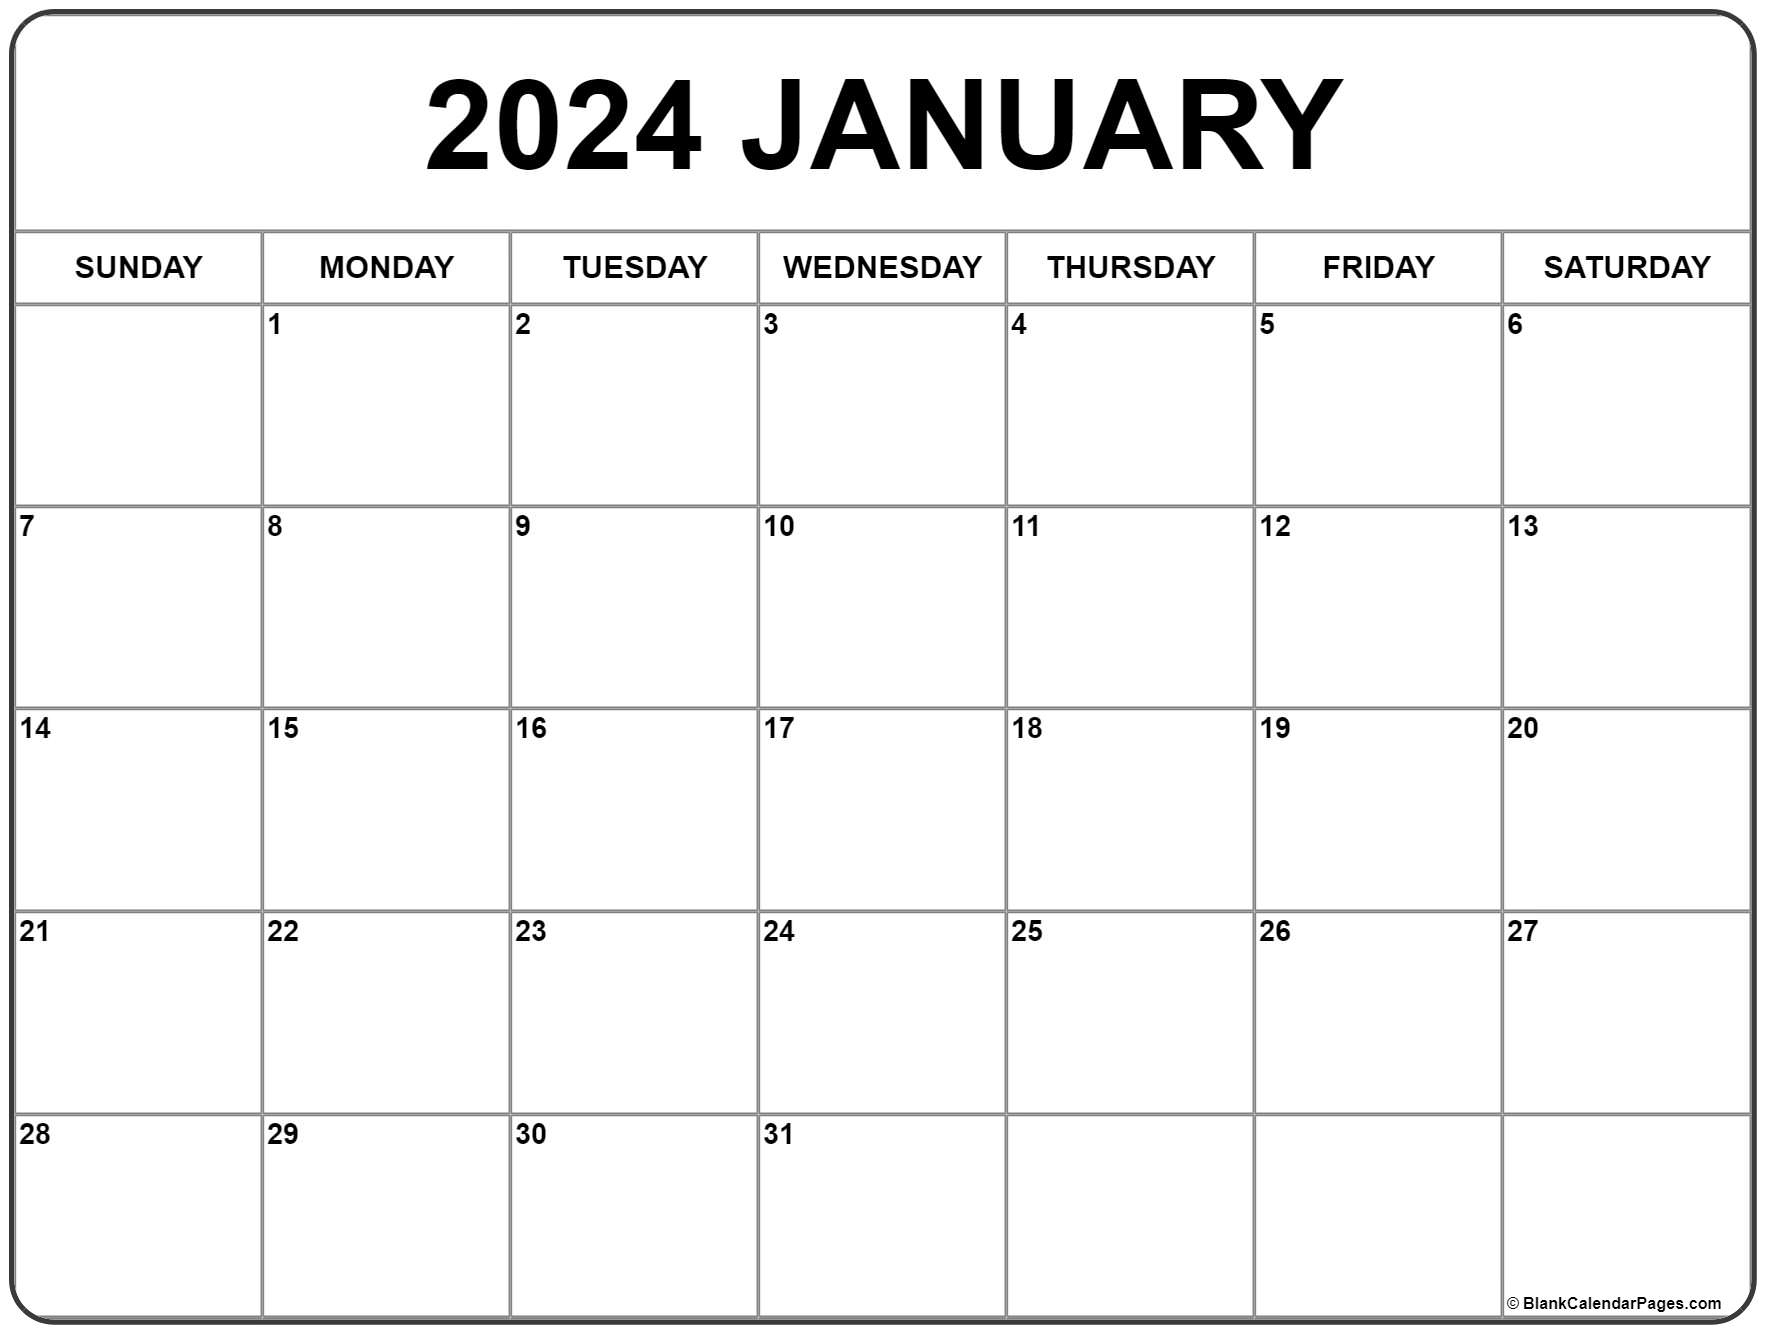 January 2024 Calendar | Free Printable Calendar intended for Free Printable Blank Calendar 2024 Template